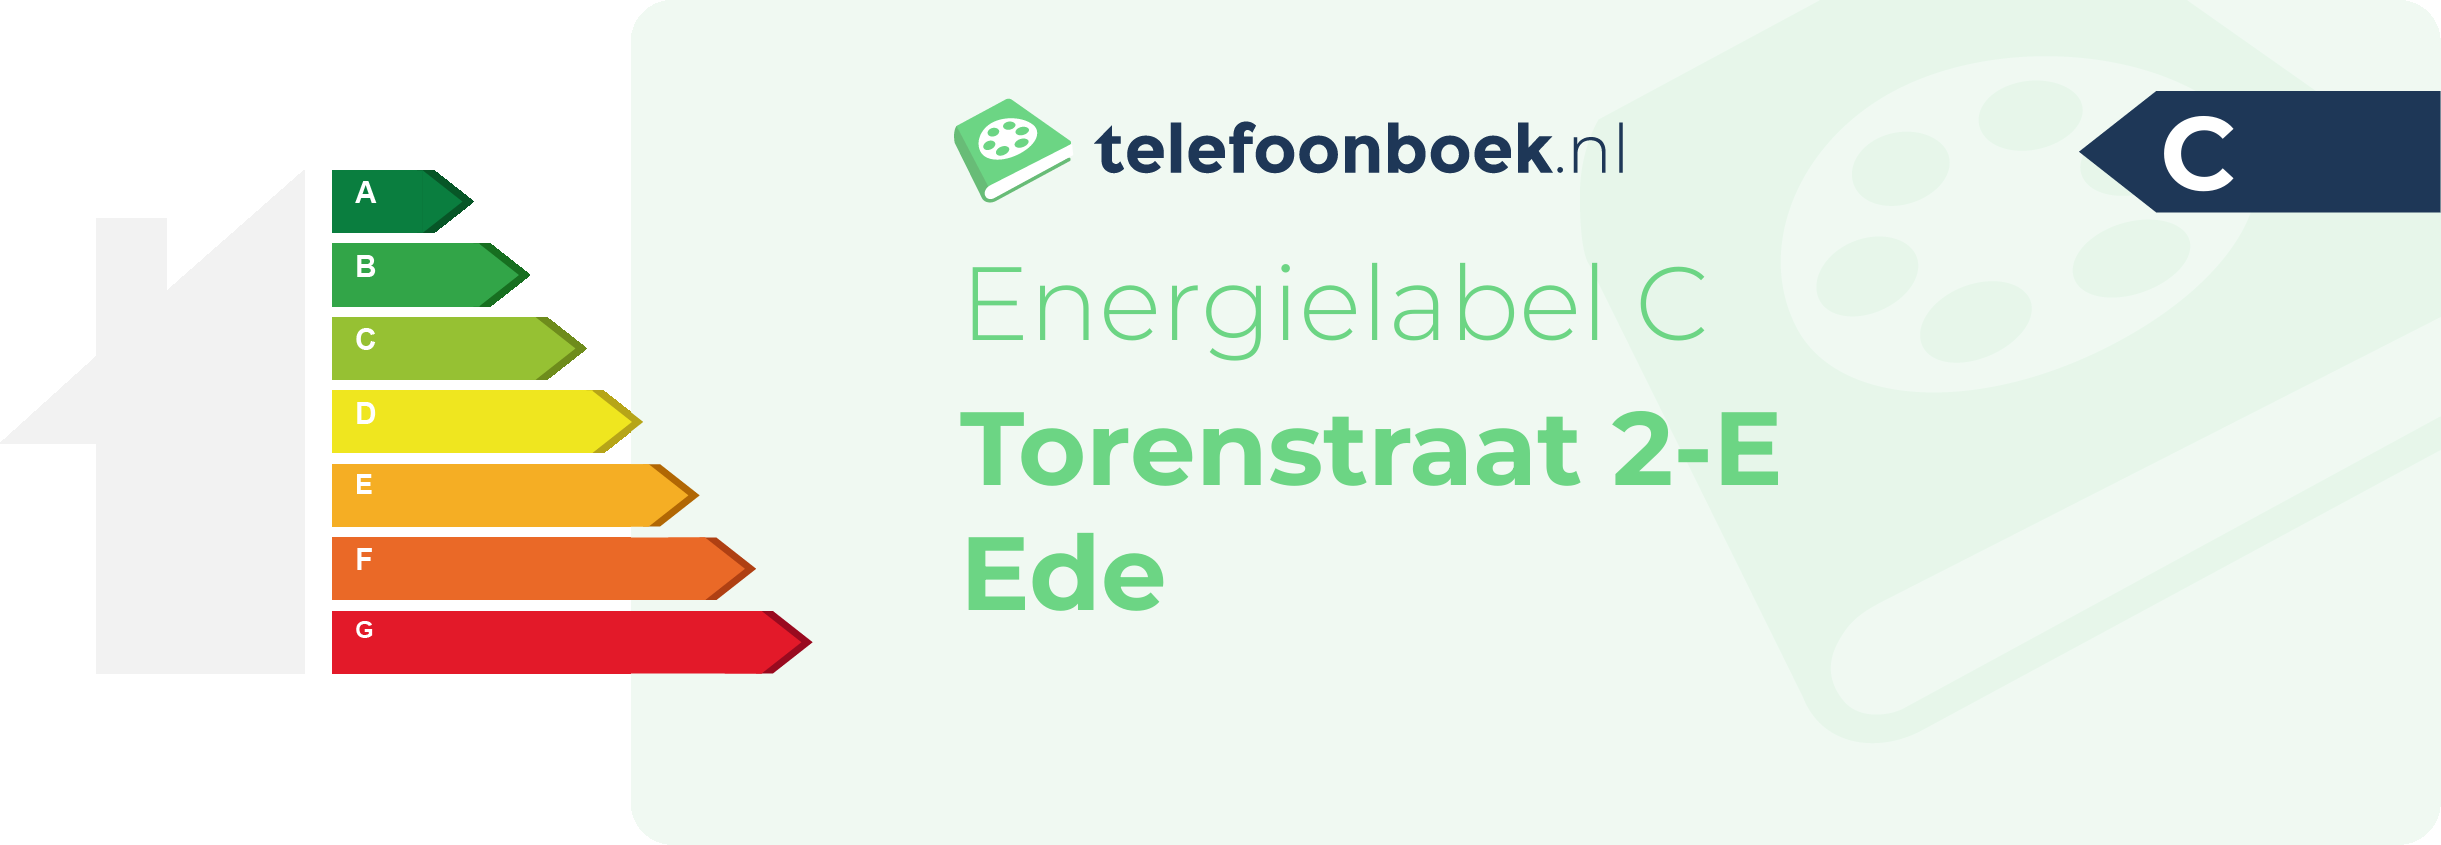 Energielabel Torenstraat 2-E Ede